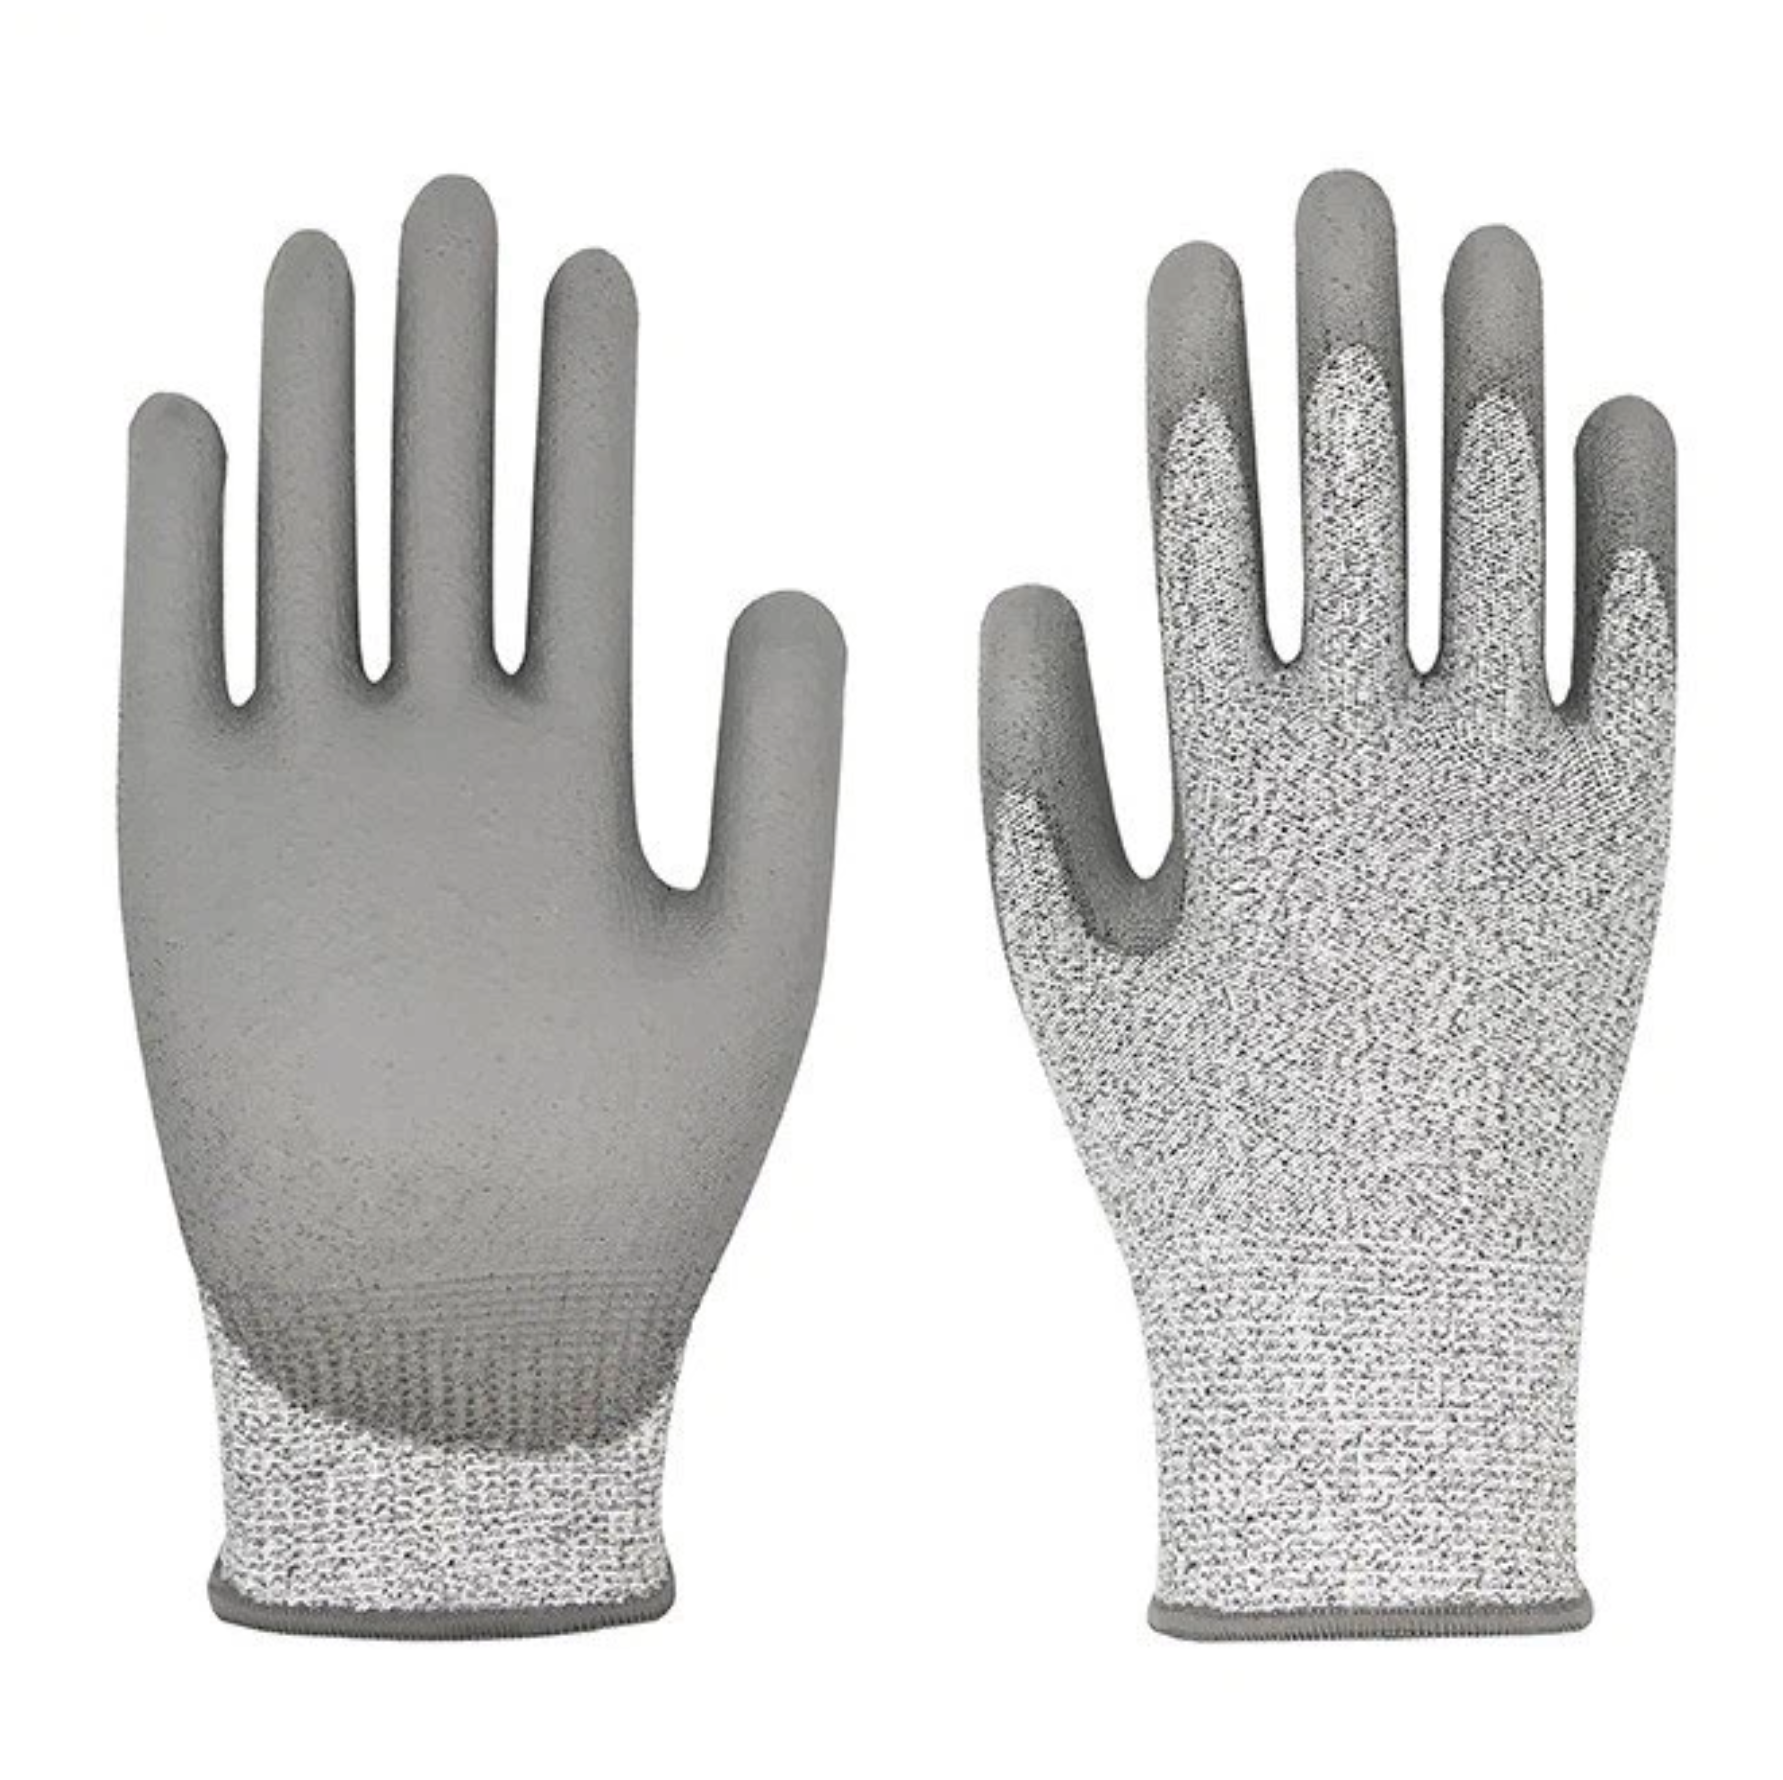 ANTI-CUT LEVEL 5 (4543) Comfort Grip Gloves